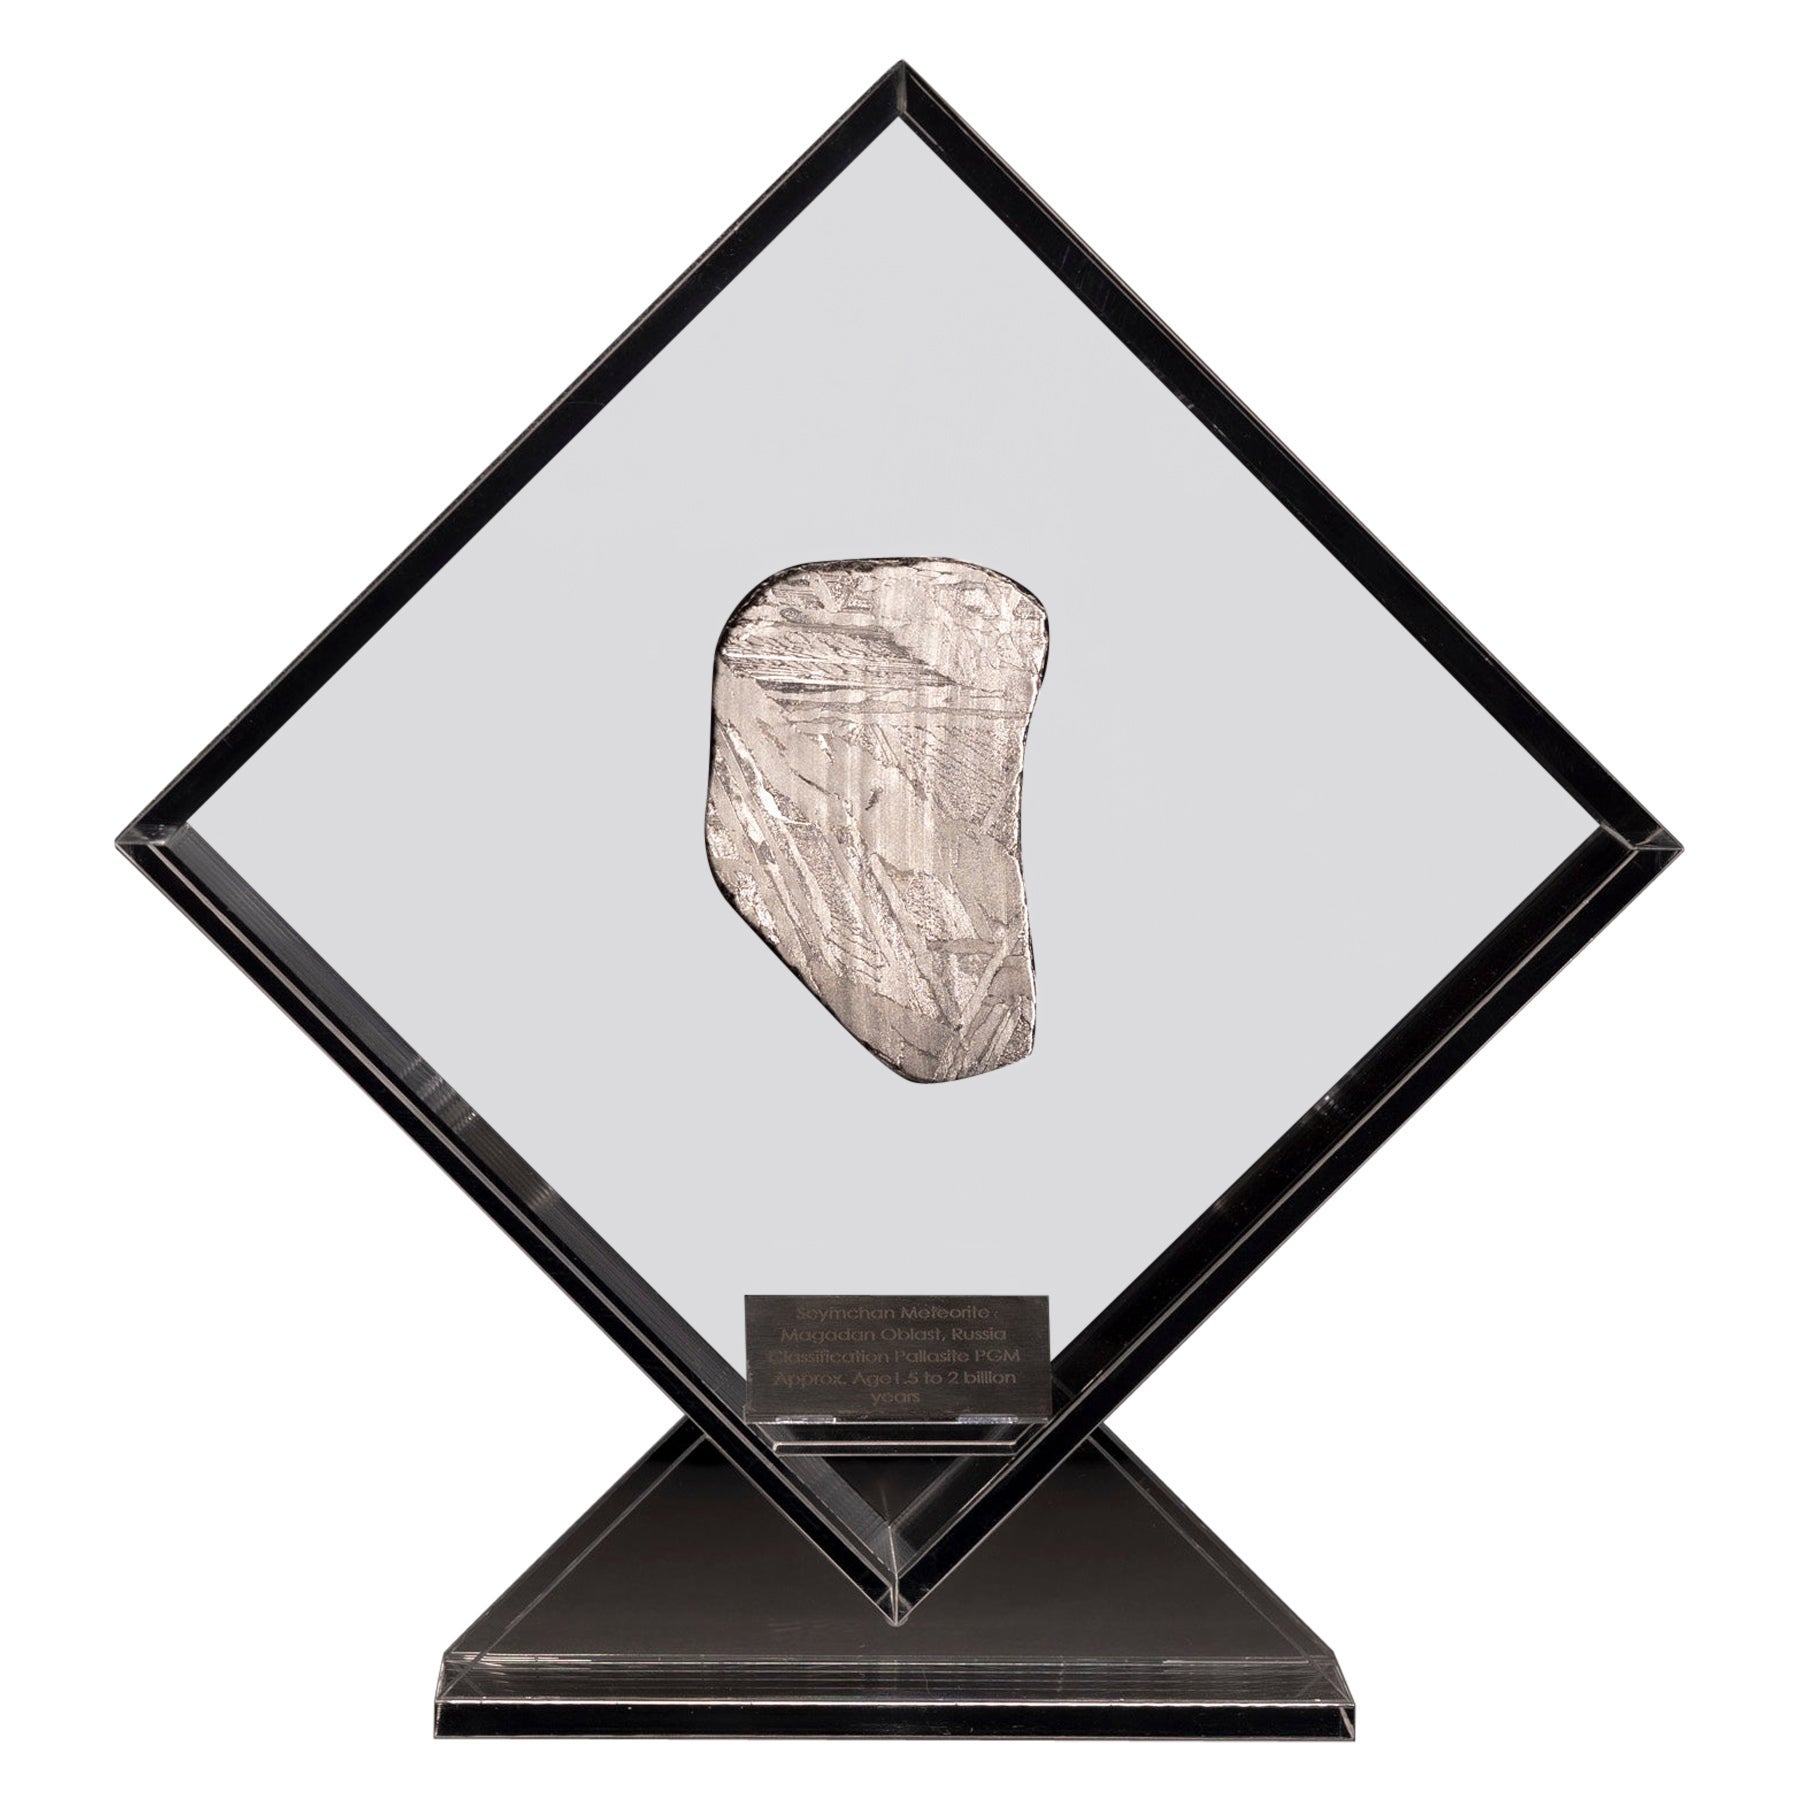 Original Design, Seymchan Meteorite in a Acrylic Display